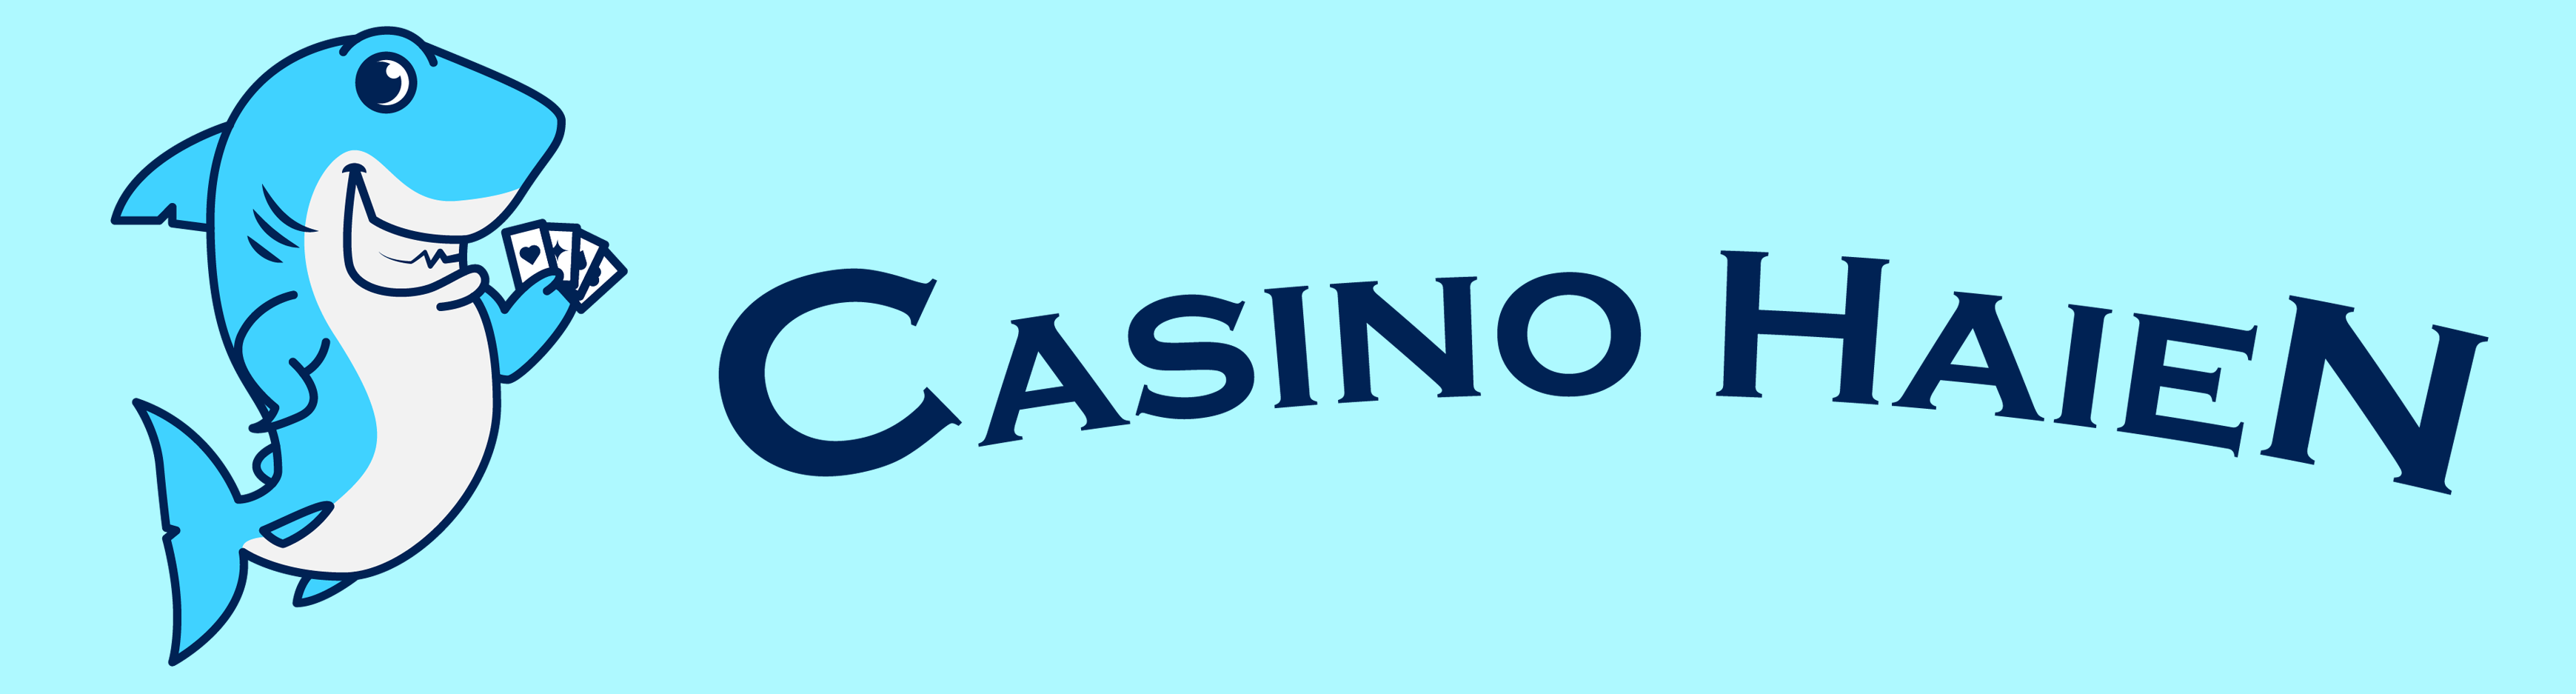 Casino haien long logo blue